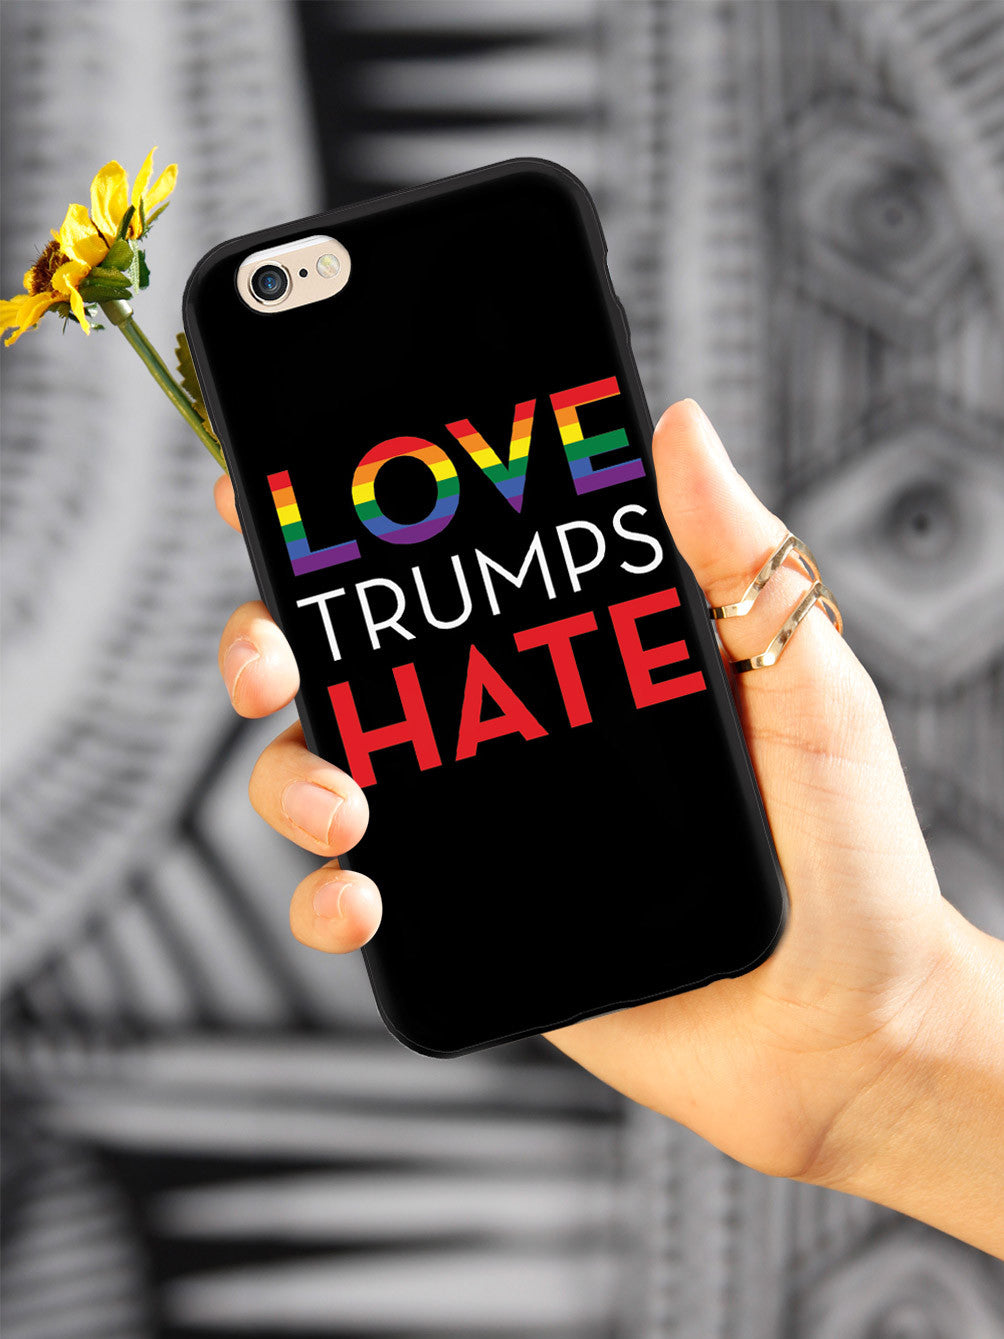 LOVE Trumps Hate - Black Case